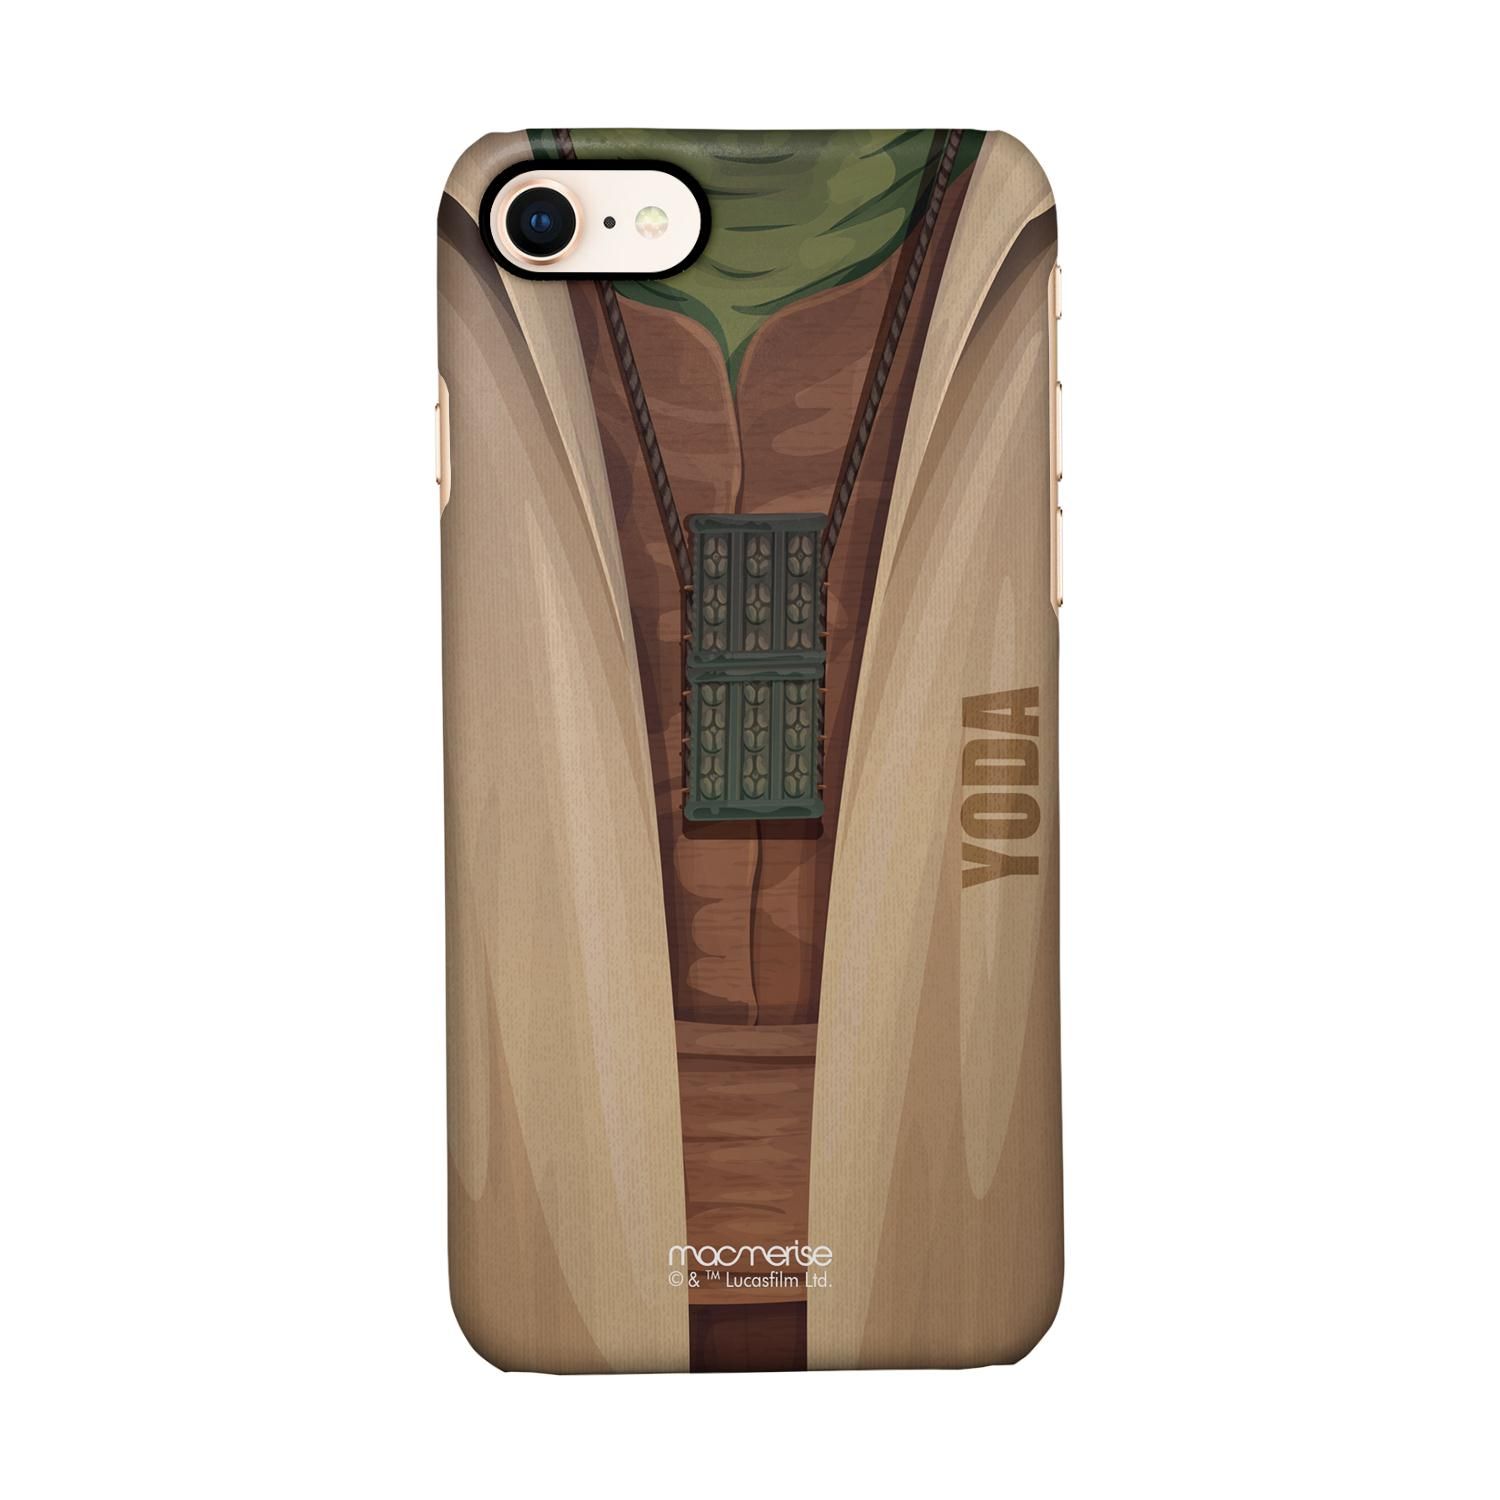 Attire Yoda - Sleek Phone Case for iPhone 7